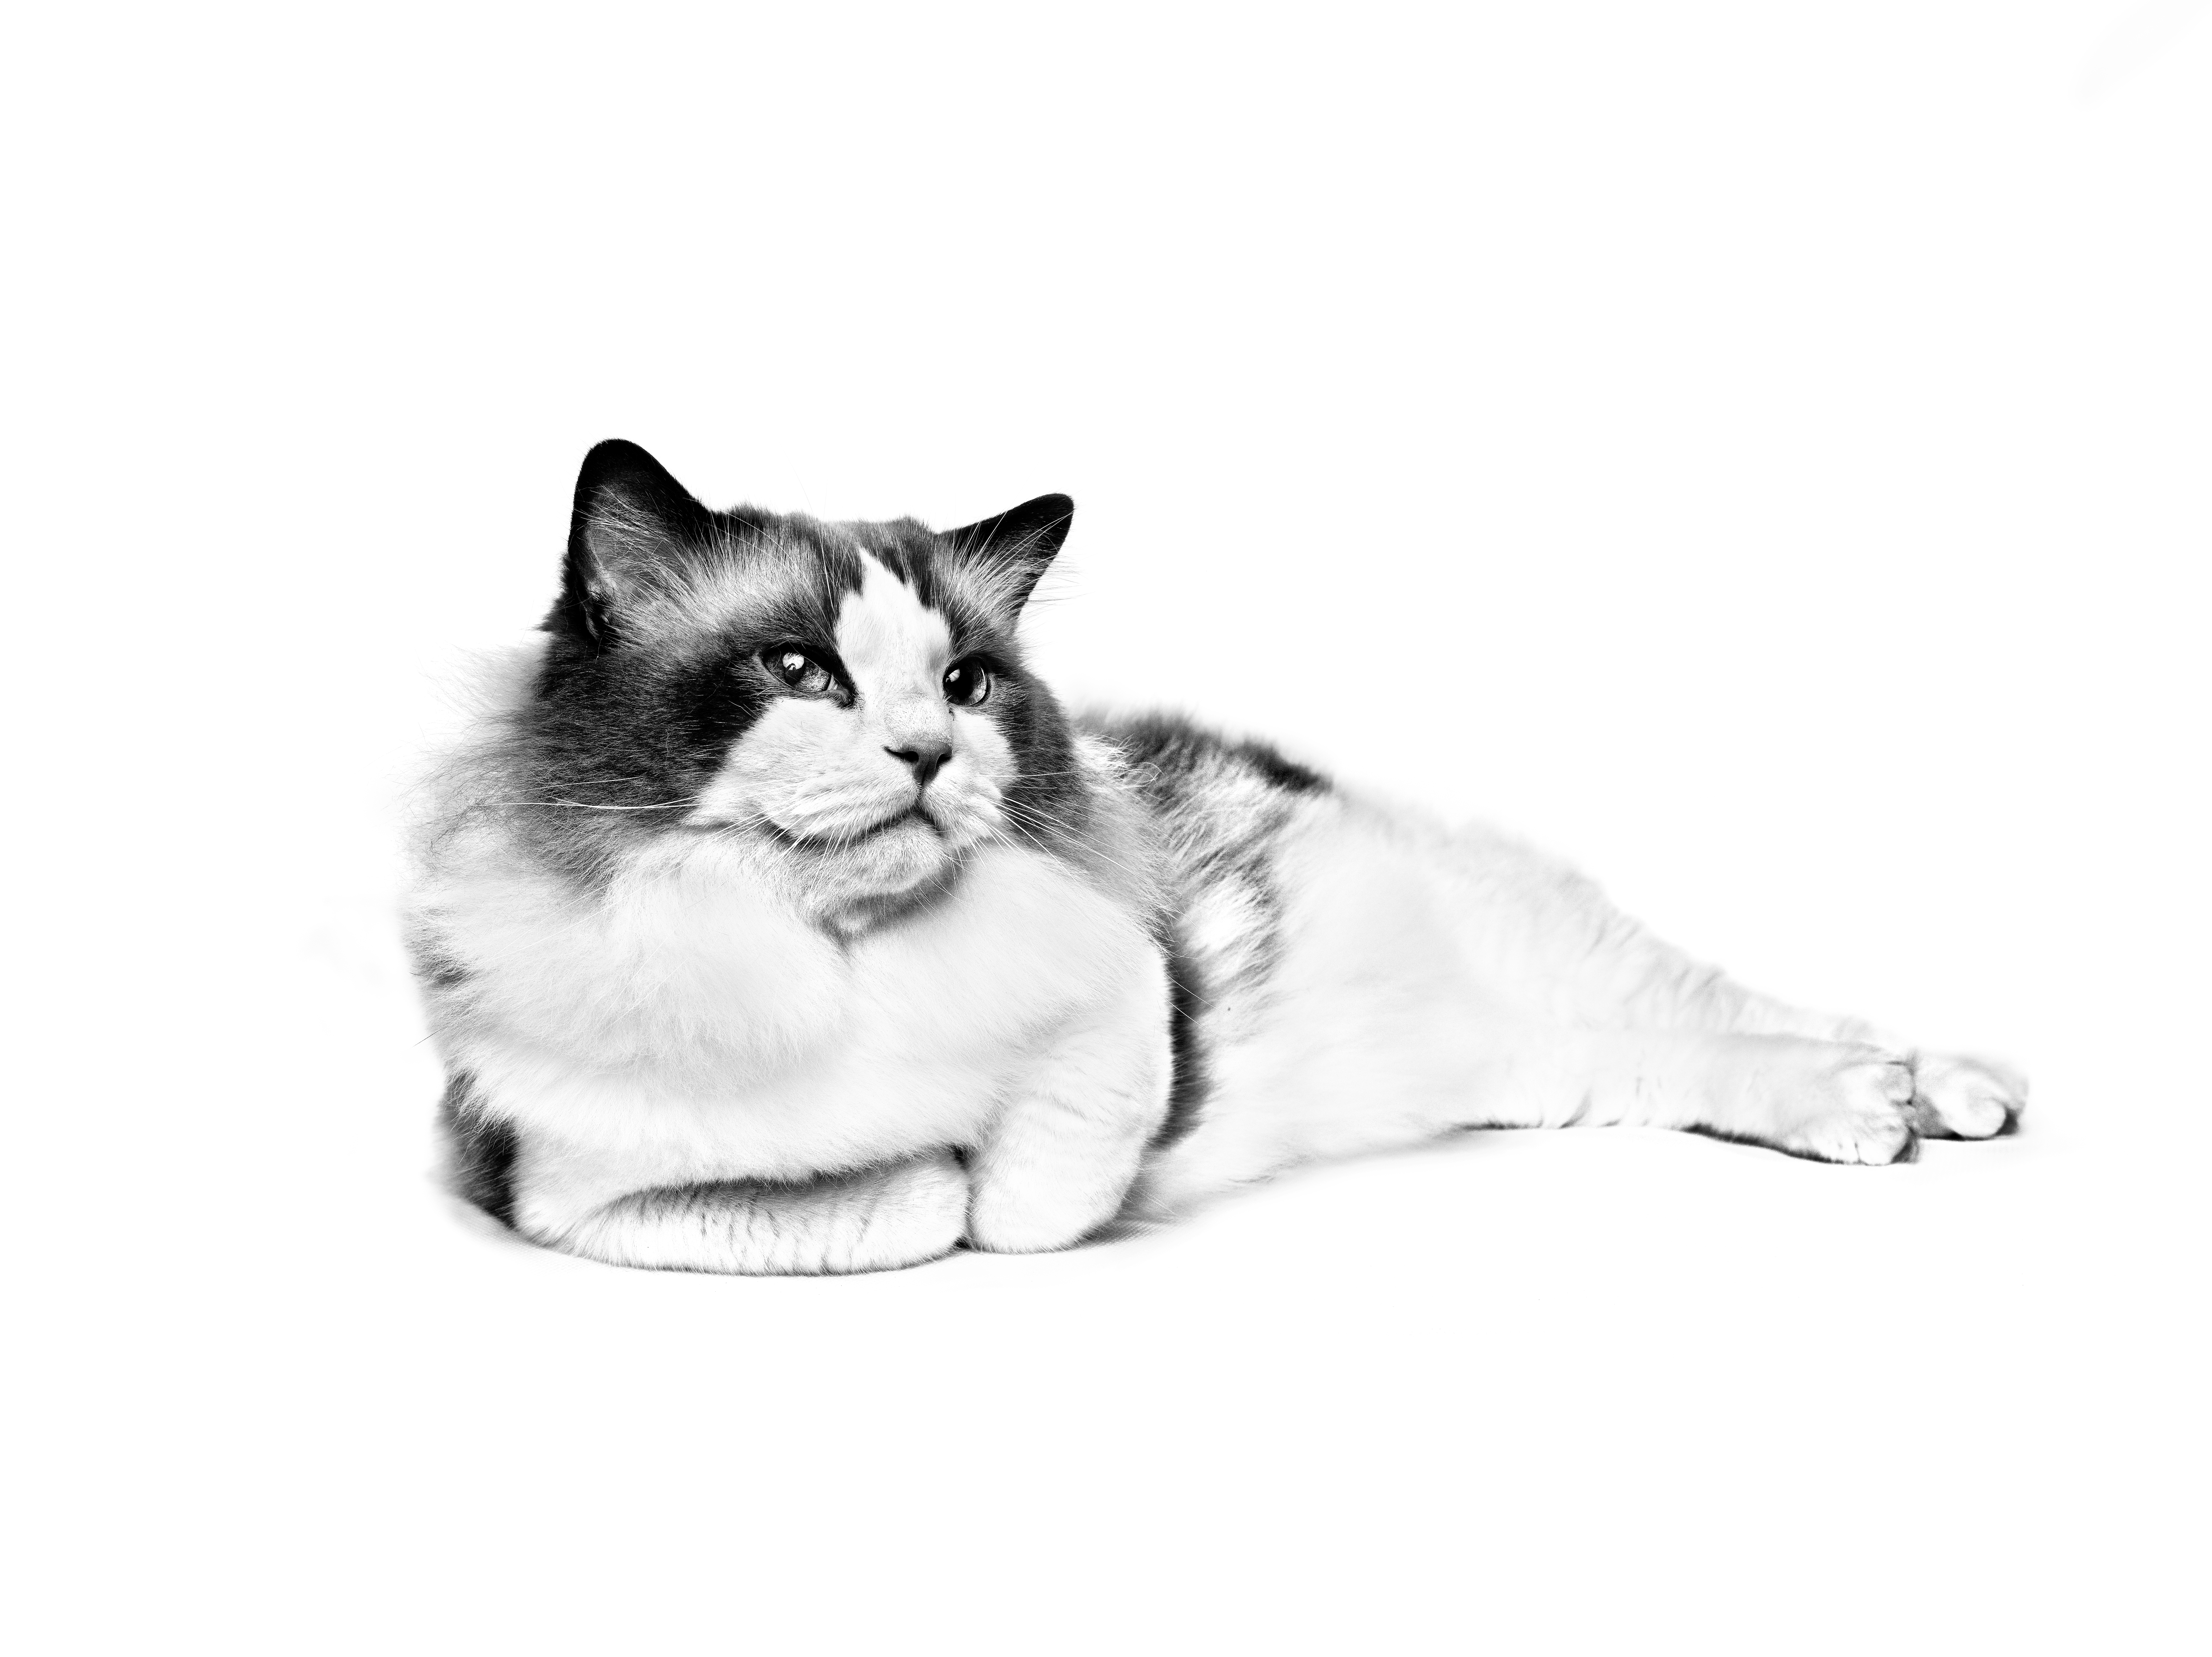 Liggende volwassen Ragdoll in zwart-wit op een witte achtergrond